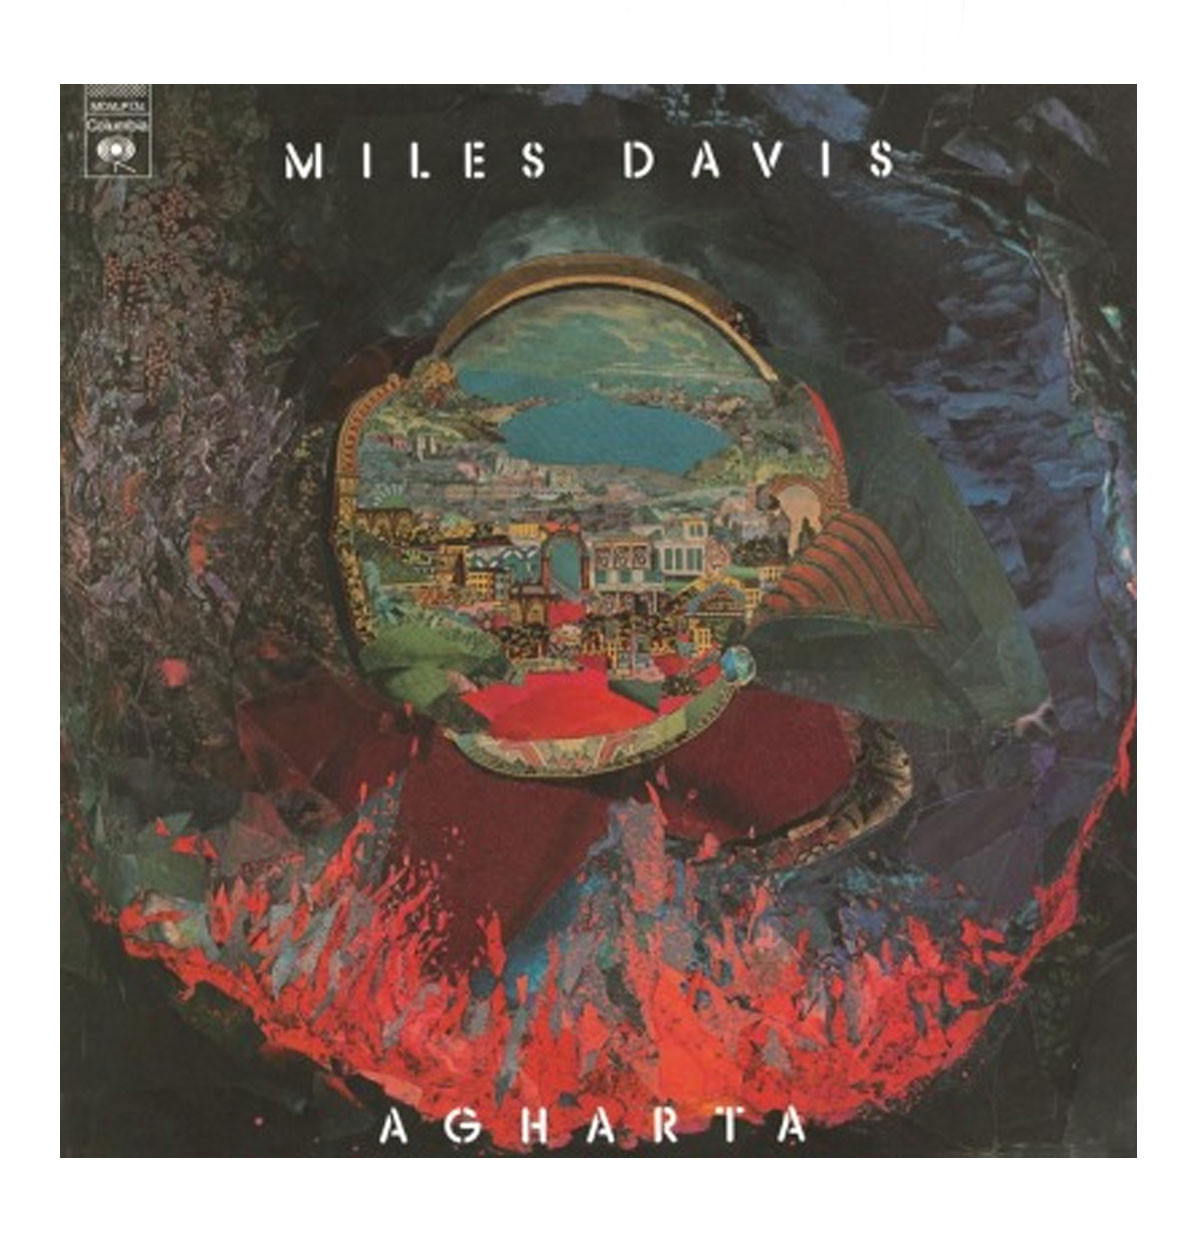 Miles Davis - Agharta 2LP